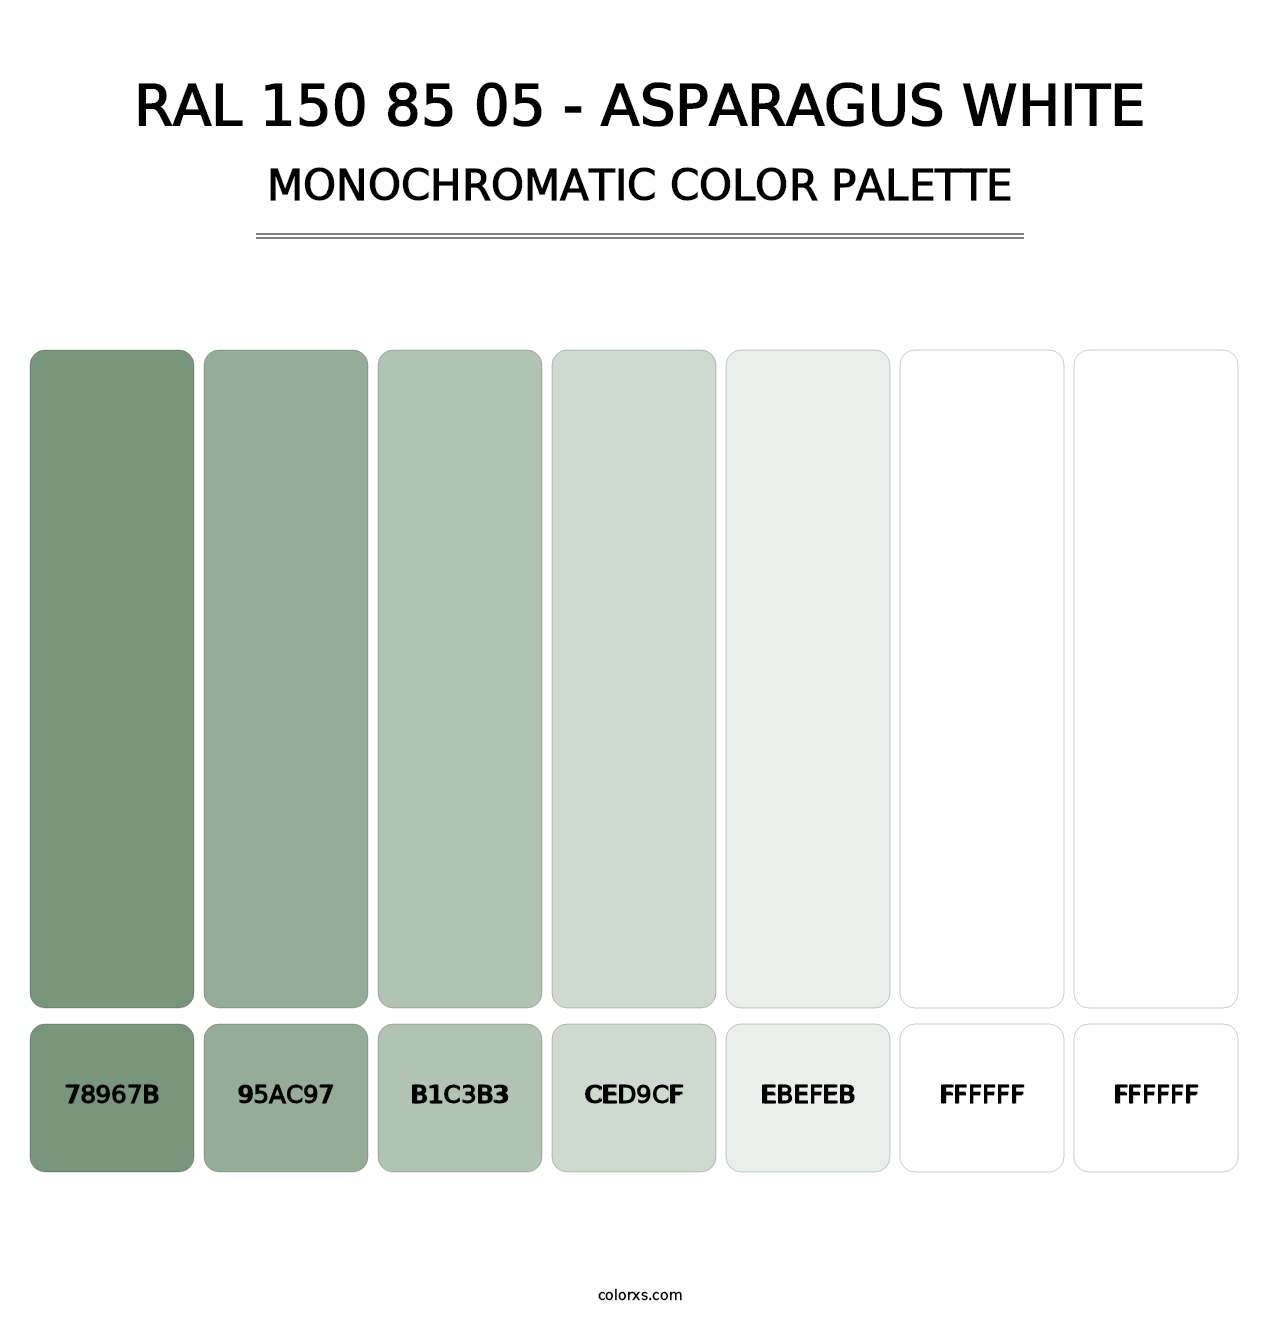 RAL 150 85 05 - Asparagus White - Monochromatic Color Palette